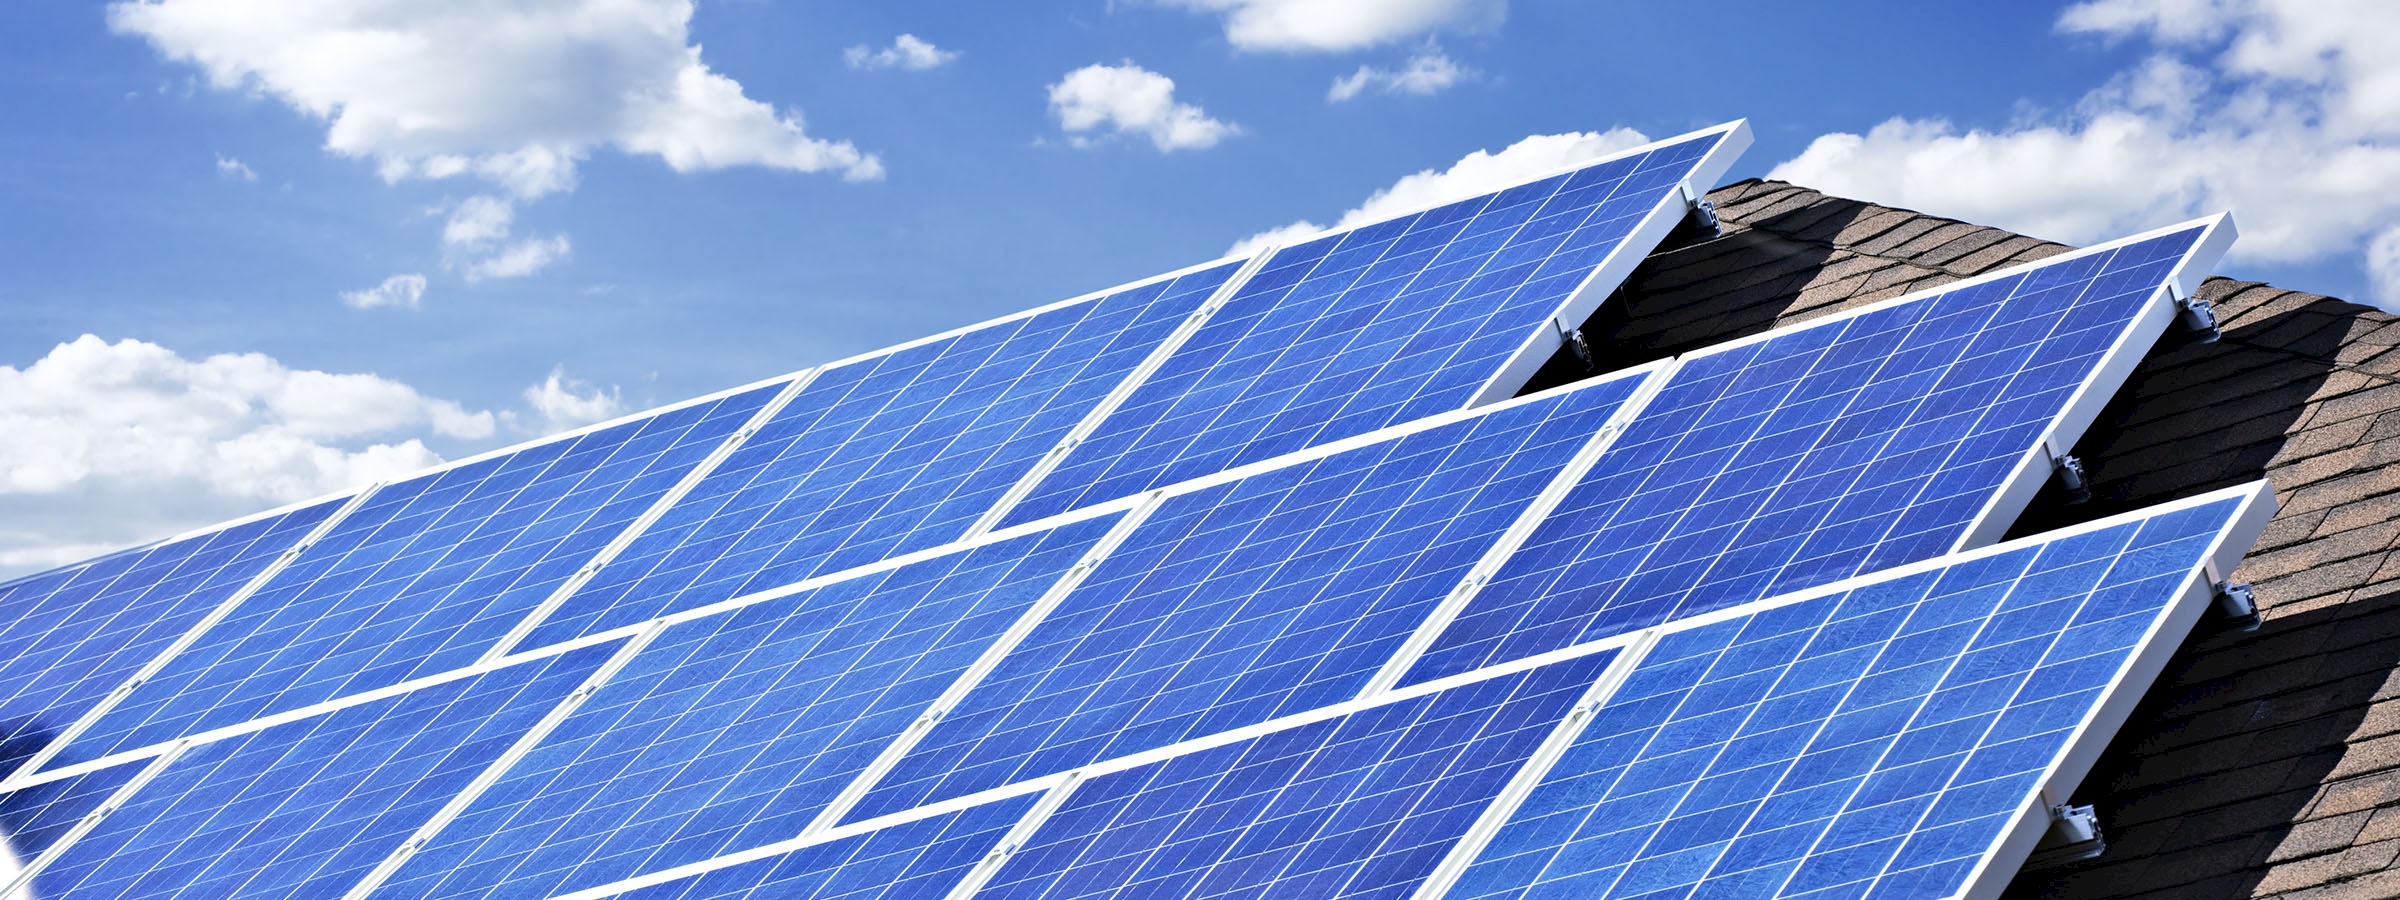 WBZ Radio - Eversource To Bill Solar Panel Customers